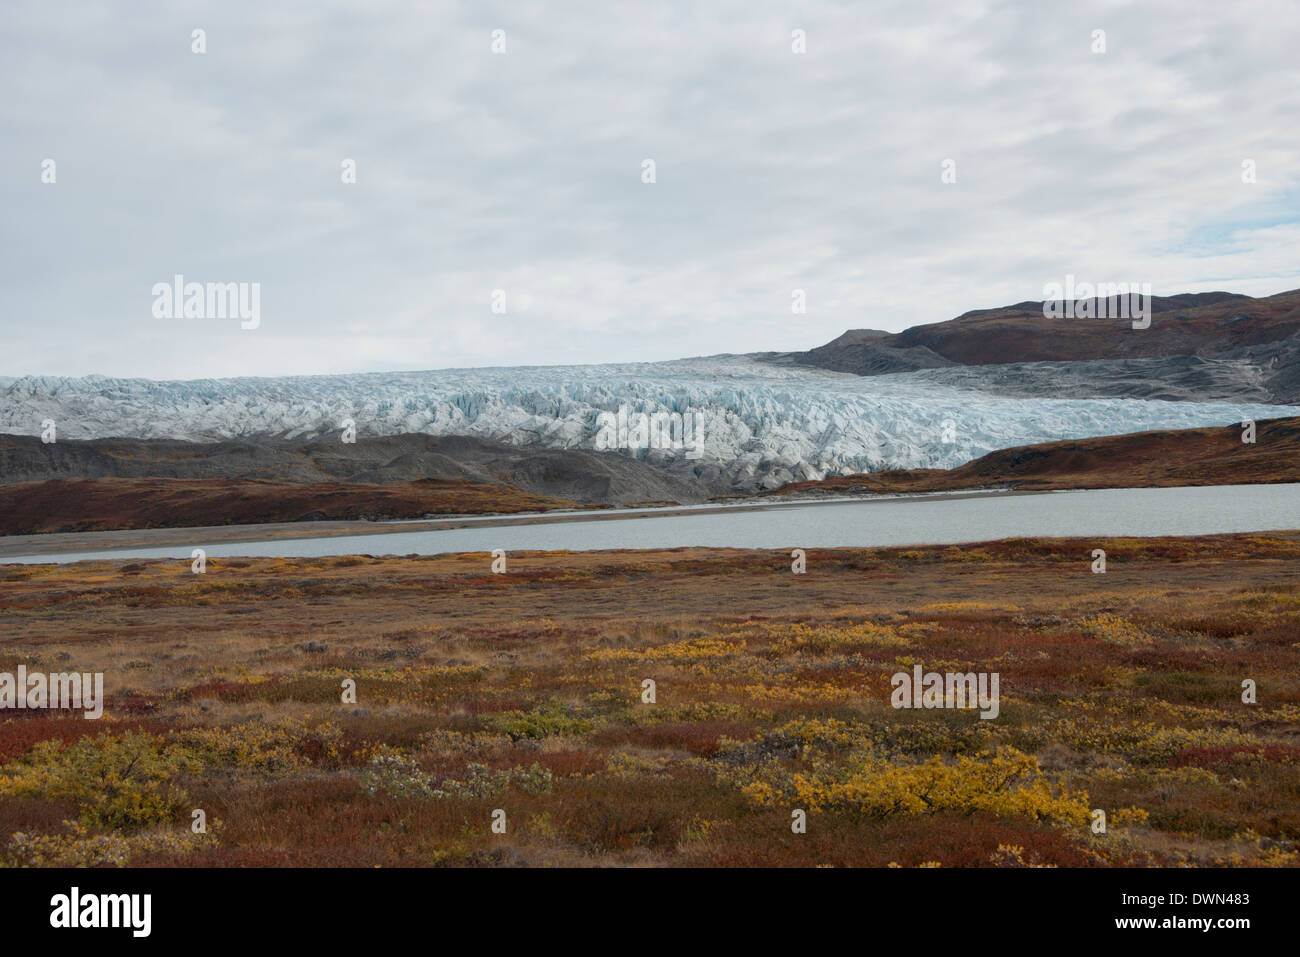 Greenland, Qeqqata municipality, Kangerlussuaq (Big Fjord aka Sondre Stromfjord). Greenland ice cap aka ice sheet. Stock Photo